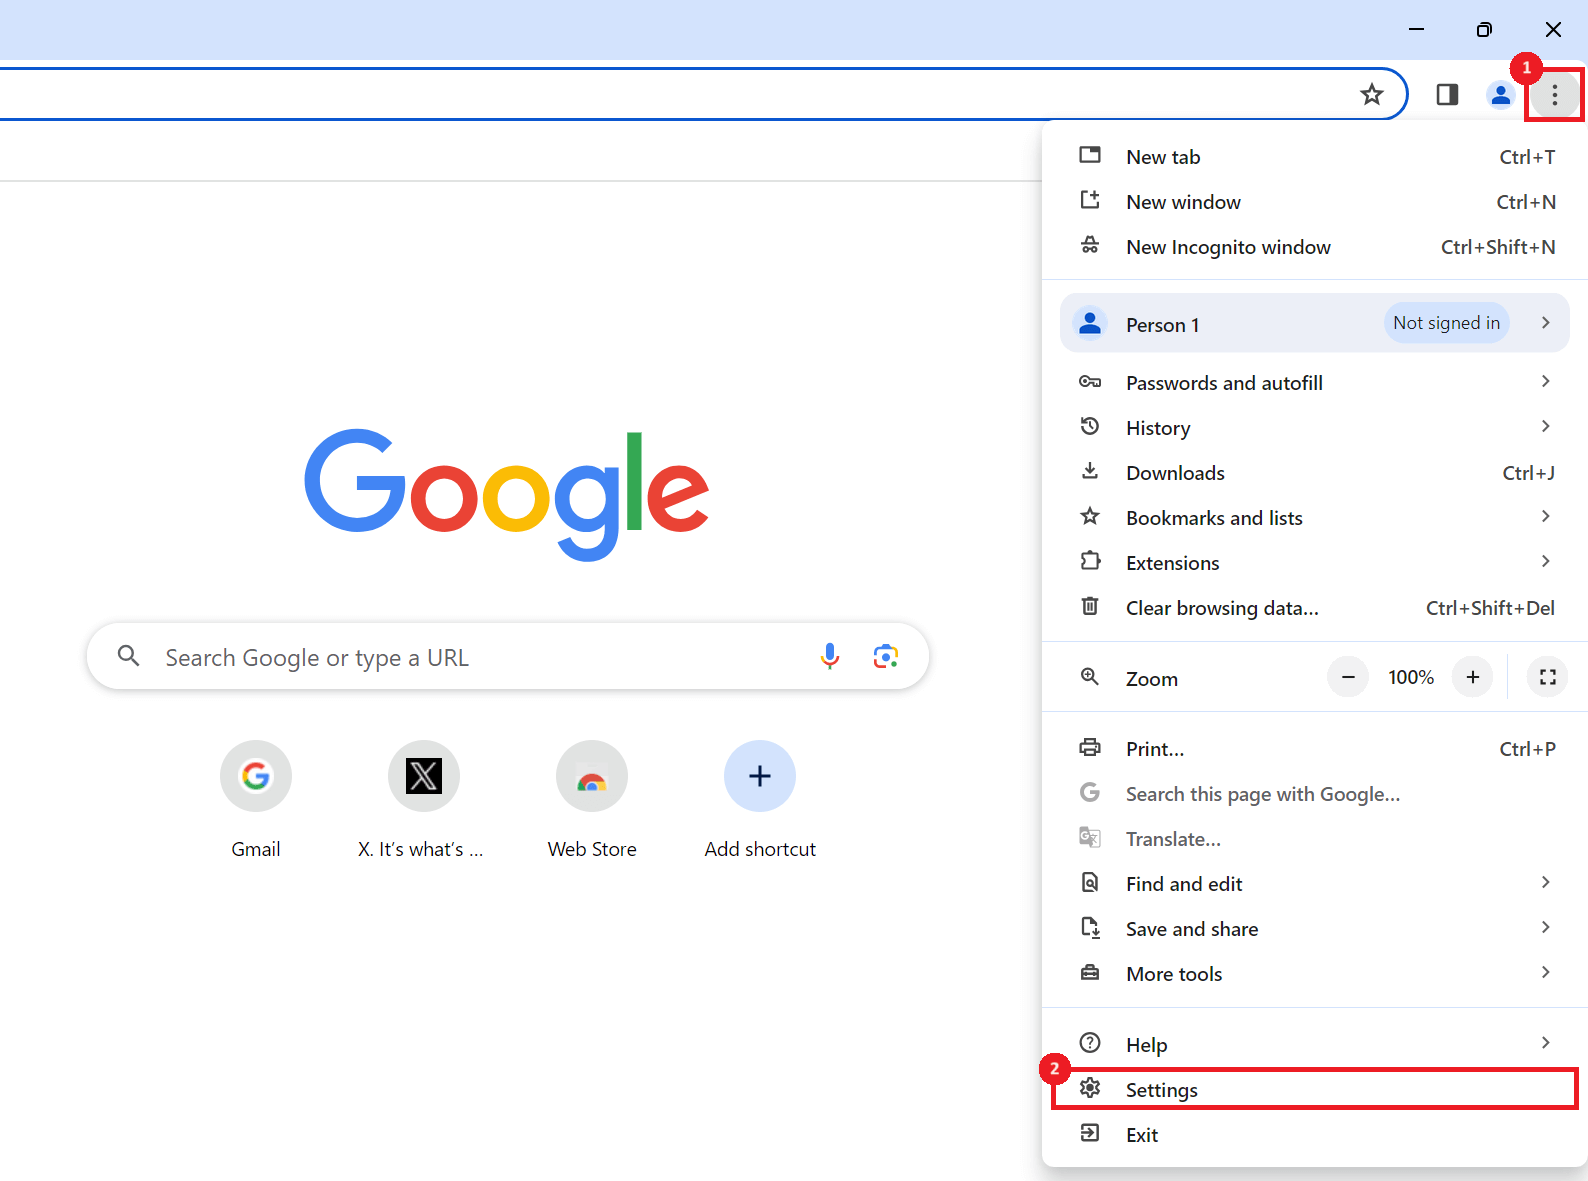 "Settings" highlighted in Google Chrome menu.